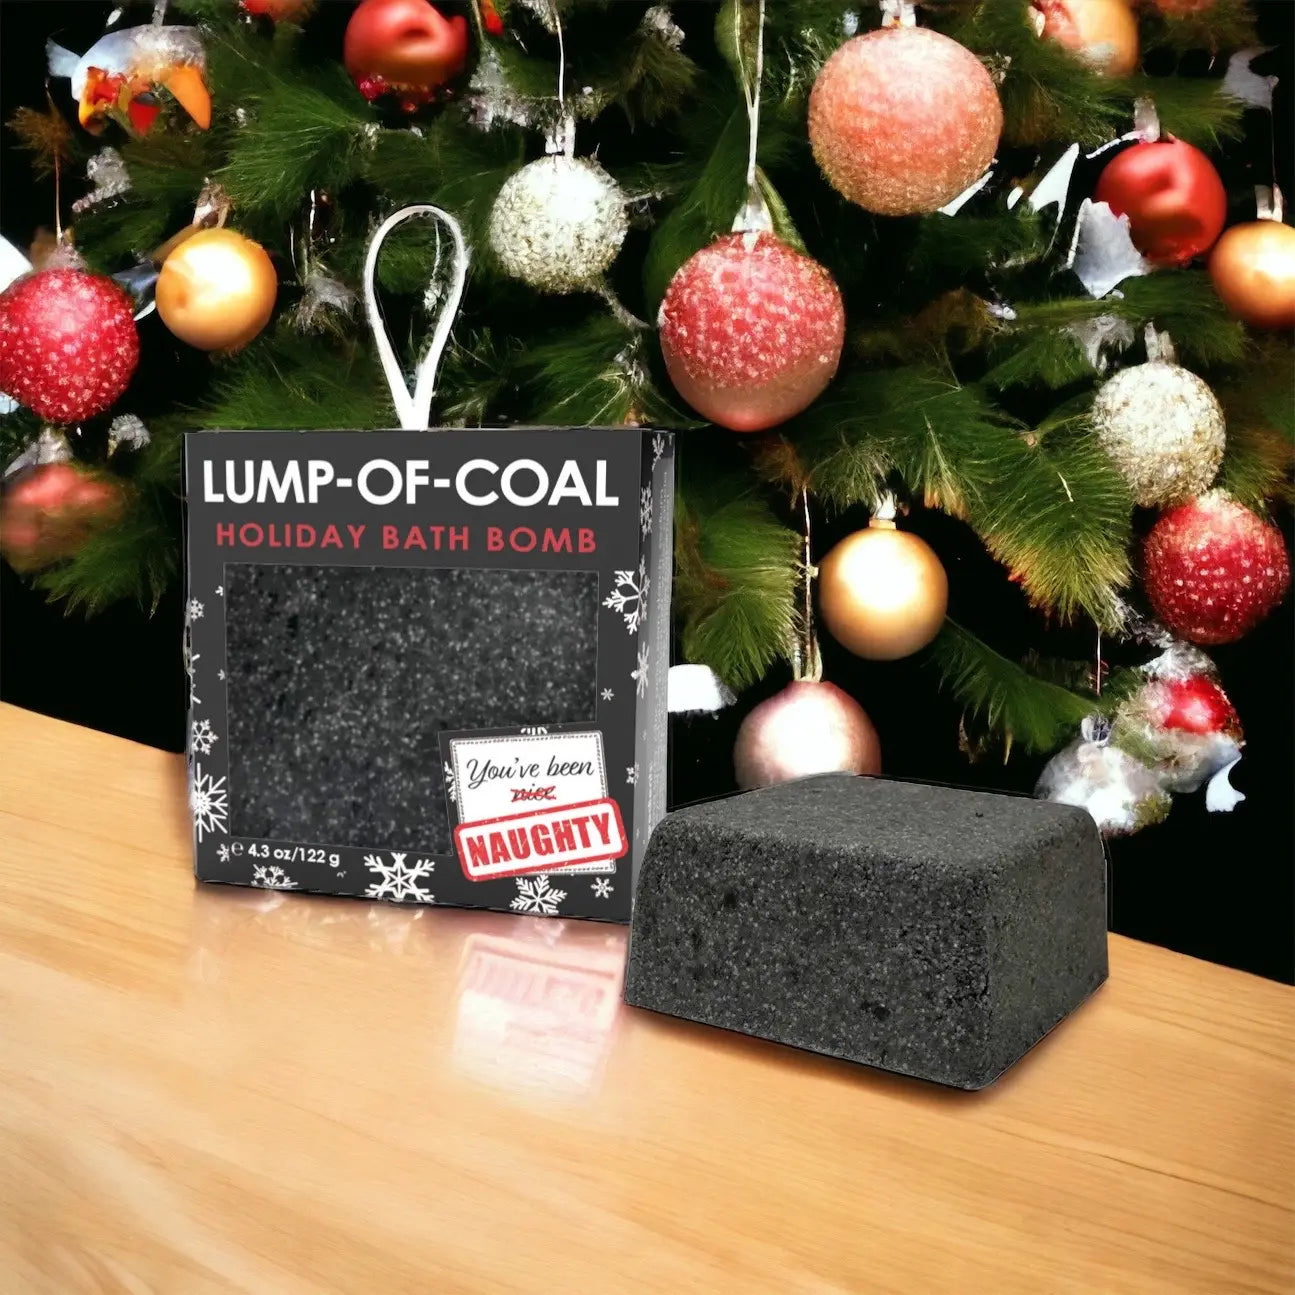 Lump-of-Coal Bath Bomb